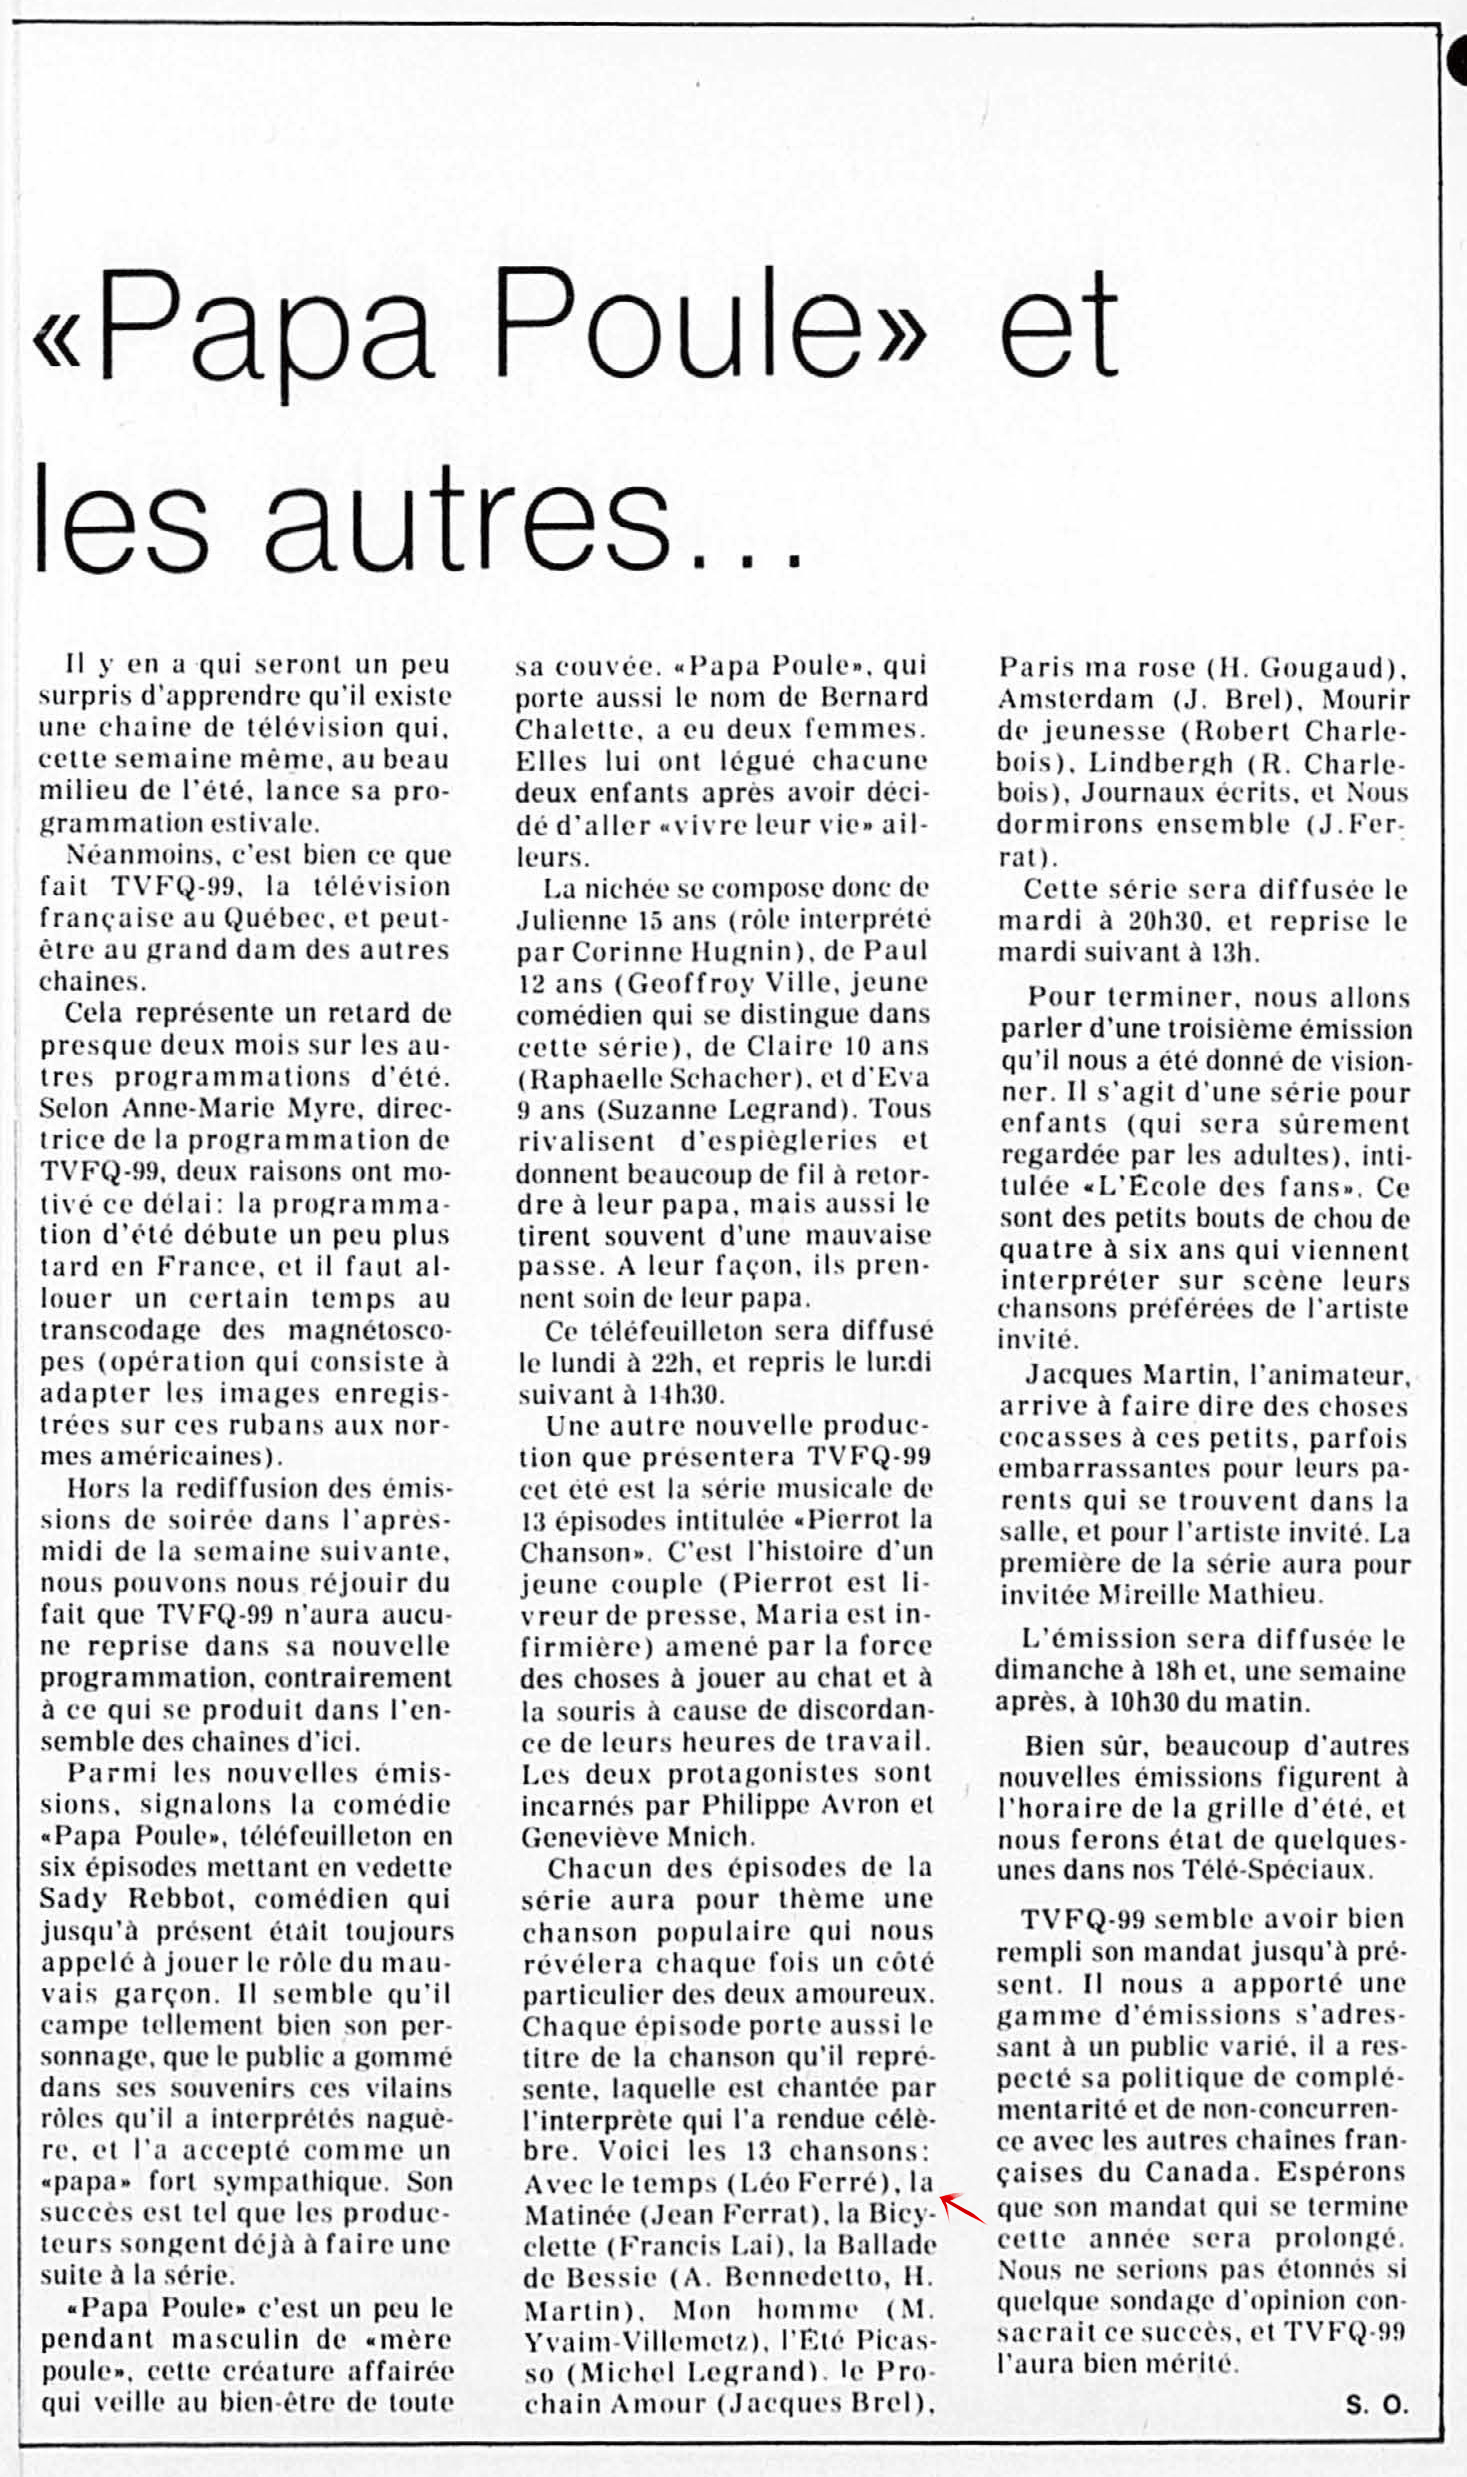 Léo Ferré - La Presse, 1 août 1981, Télé presse